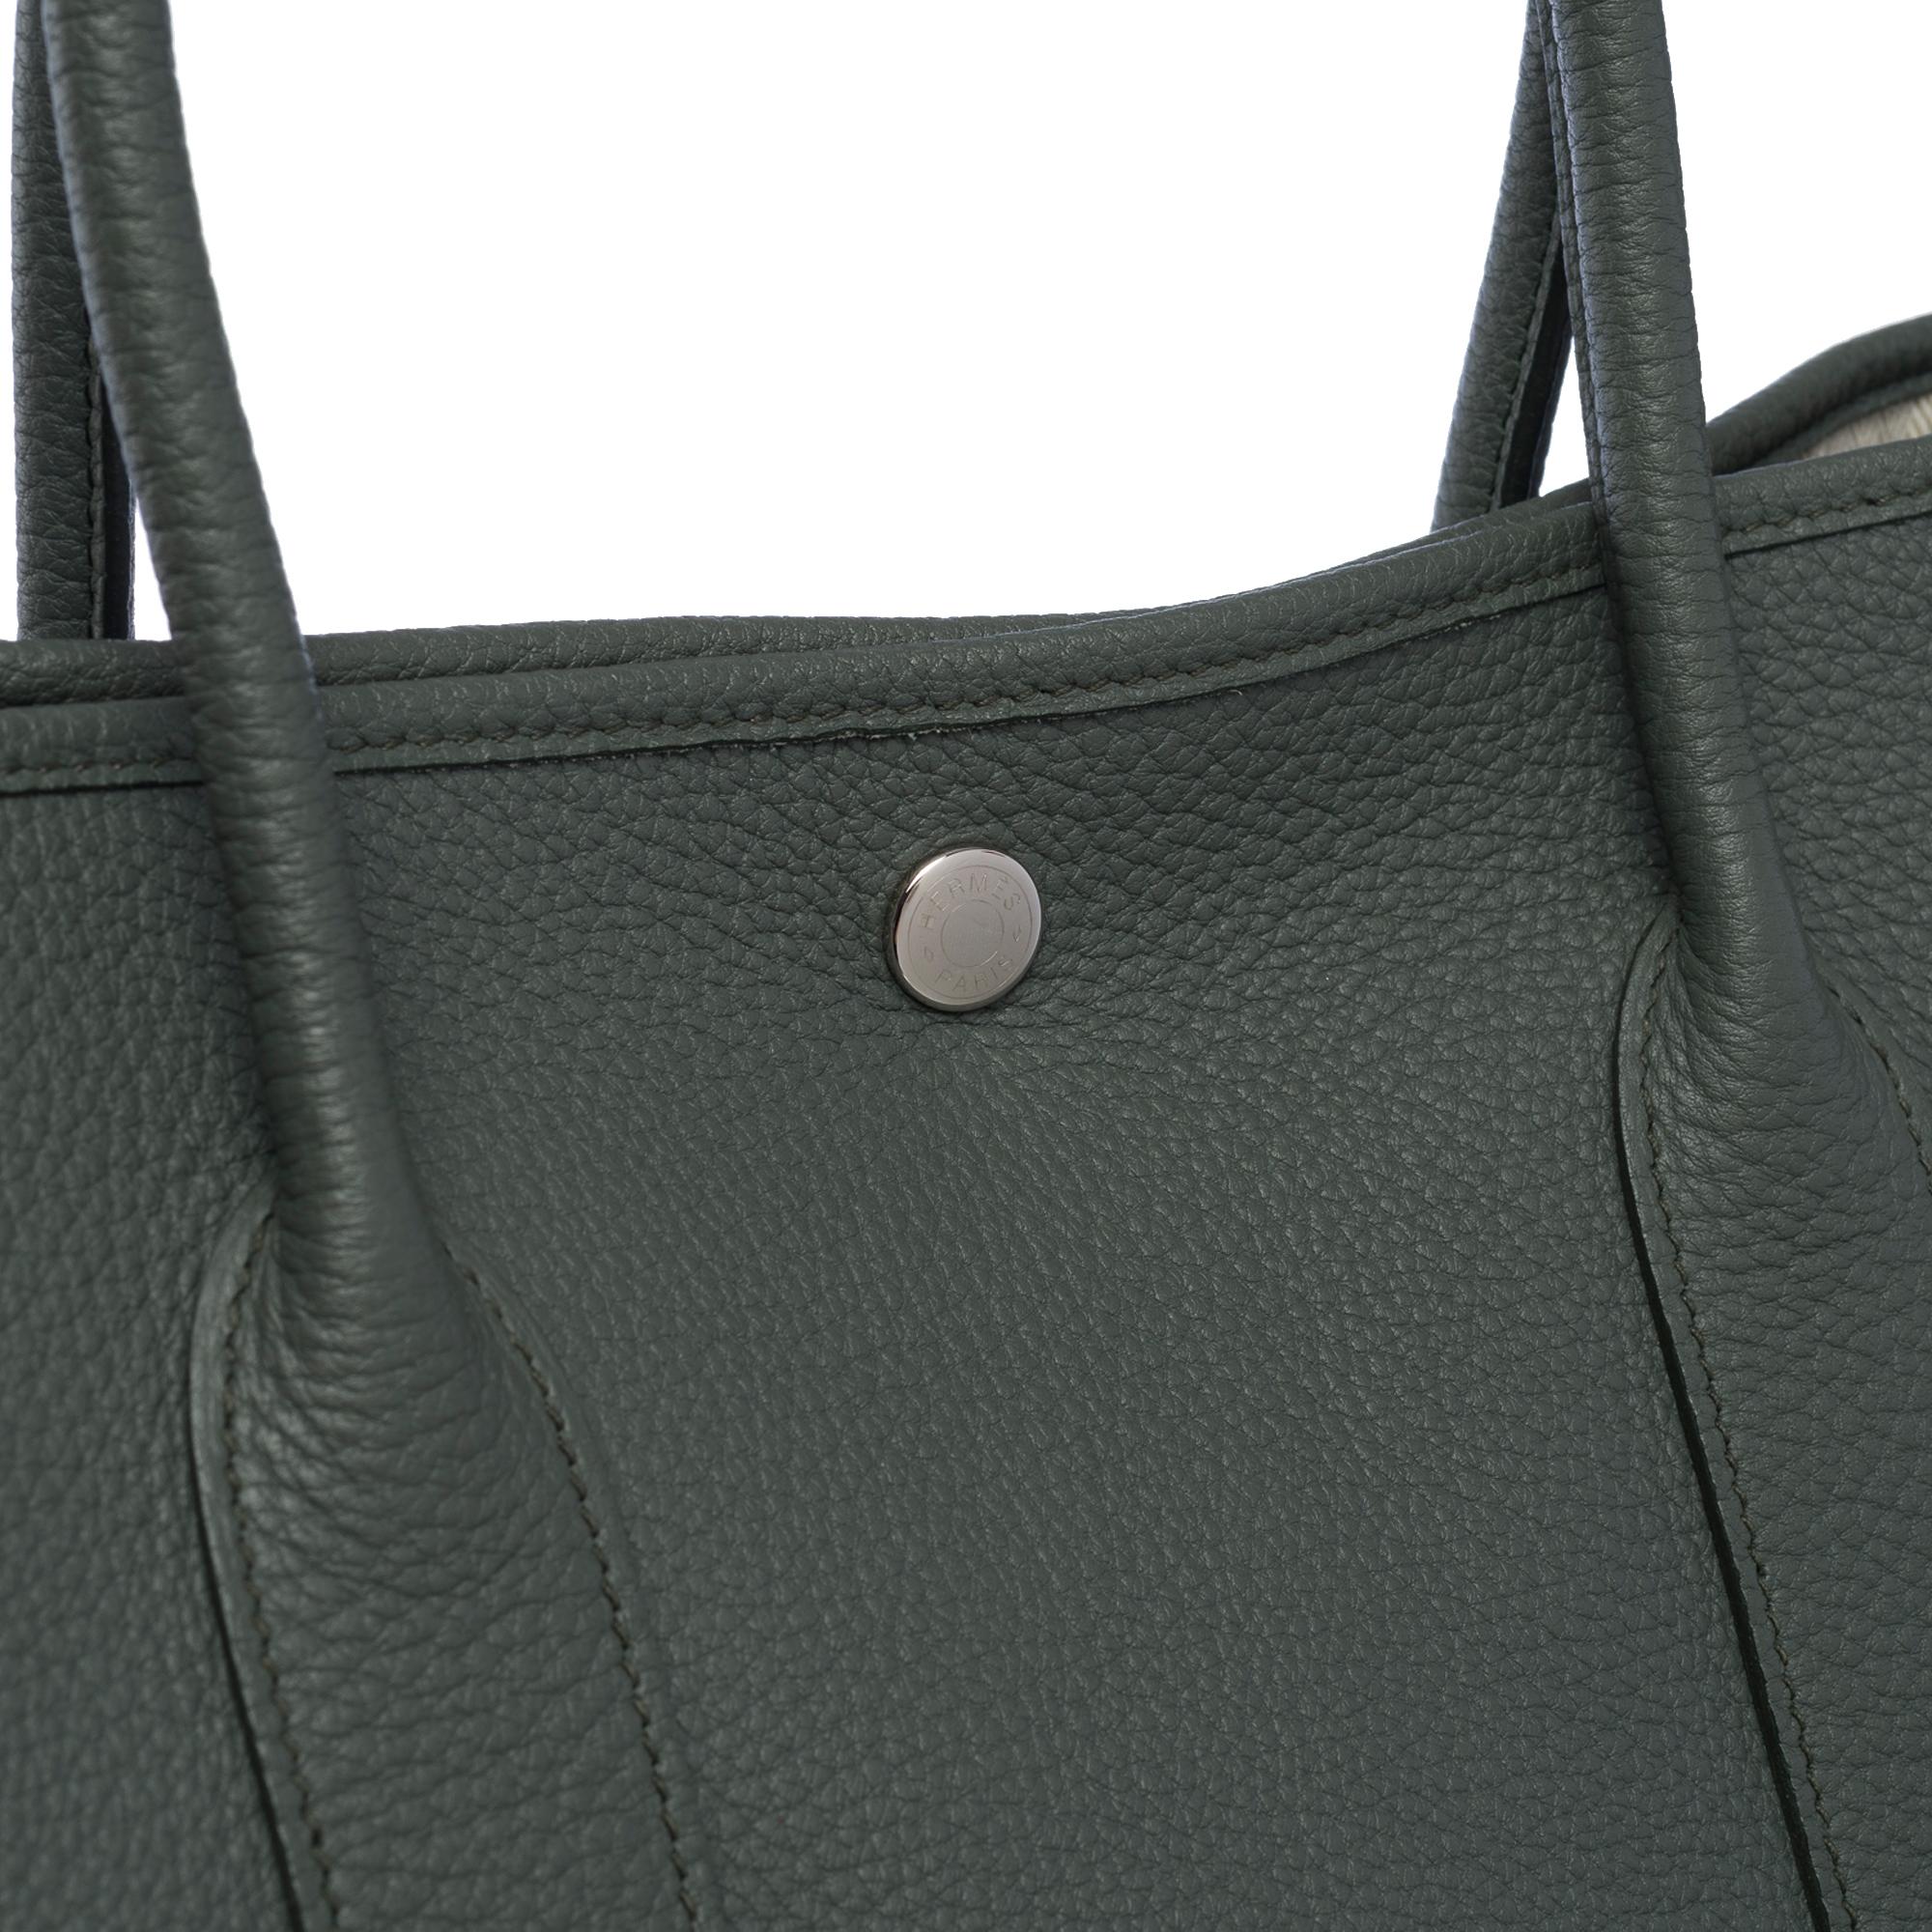 Gorgeous Hermès Garden Party 36 Tote bag in green Almond Negonda leather, SHW 1